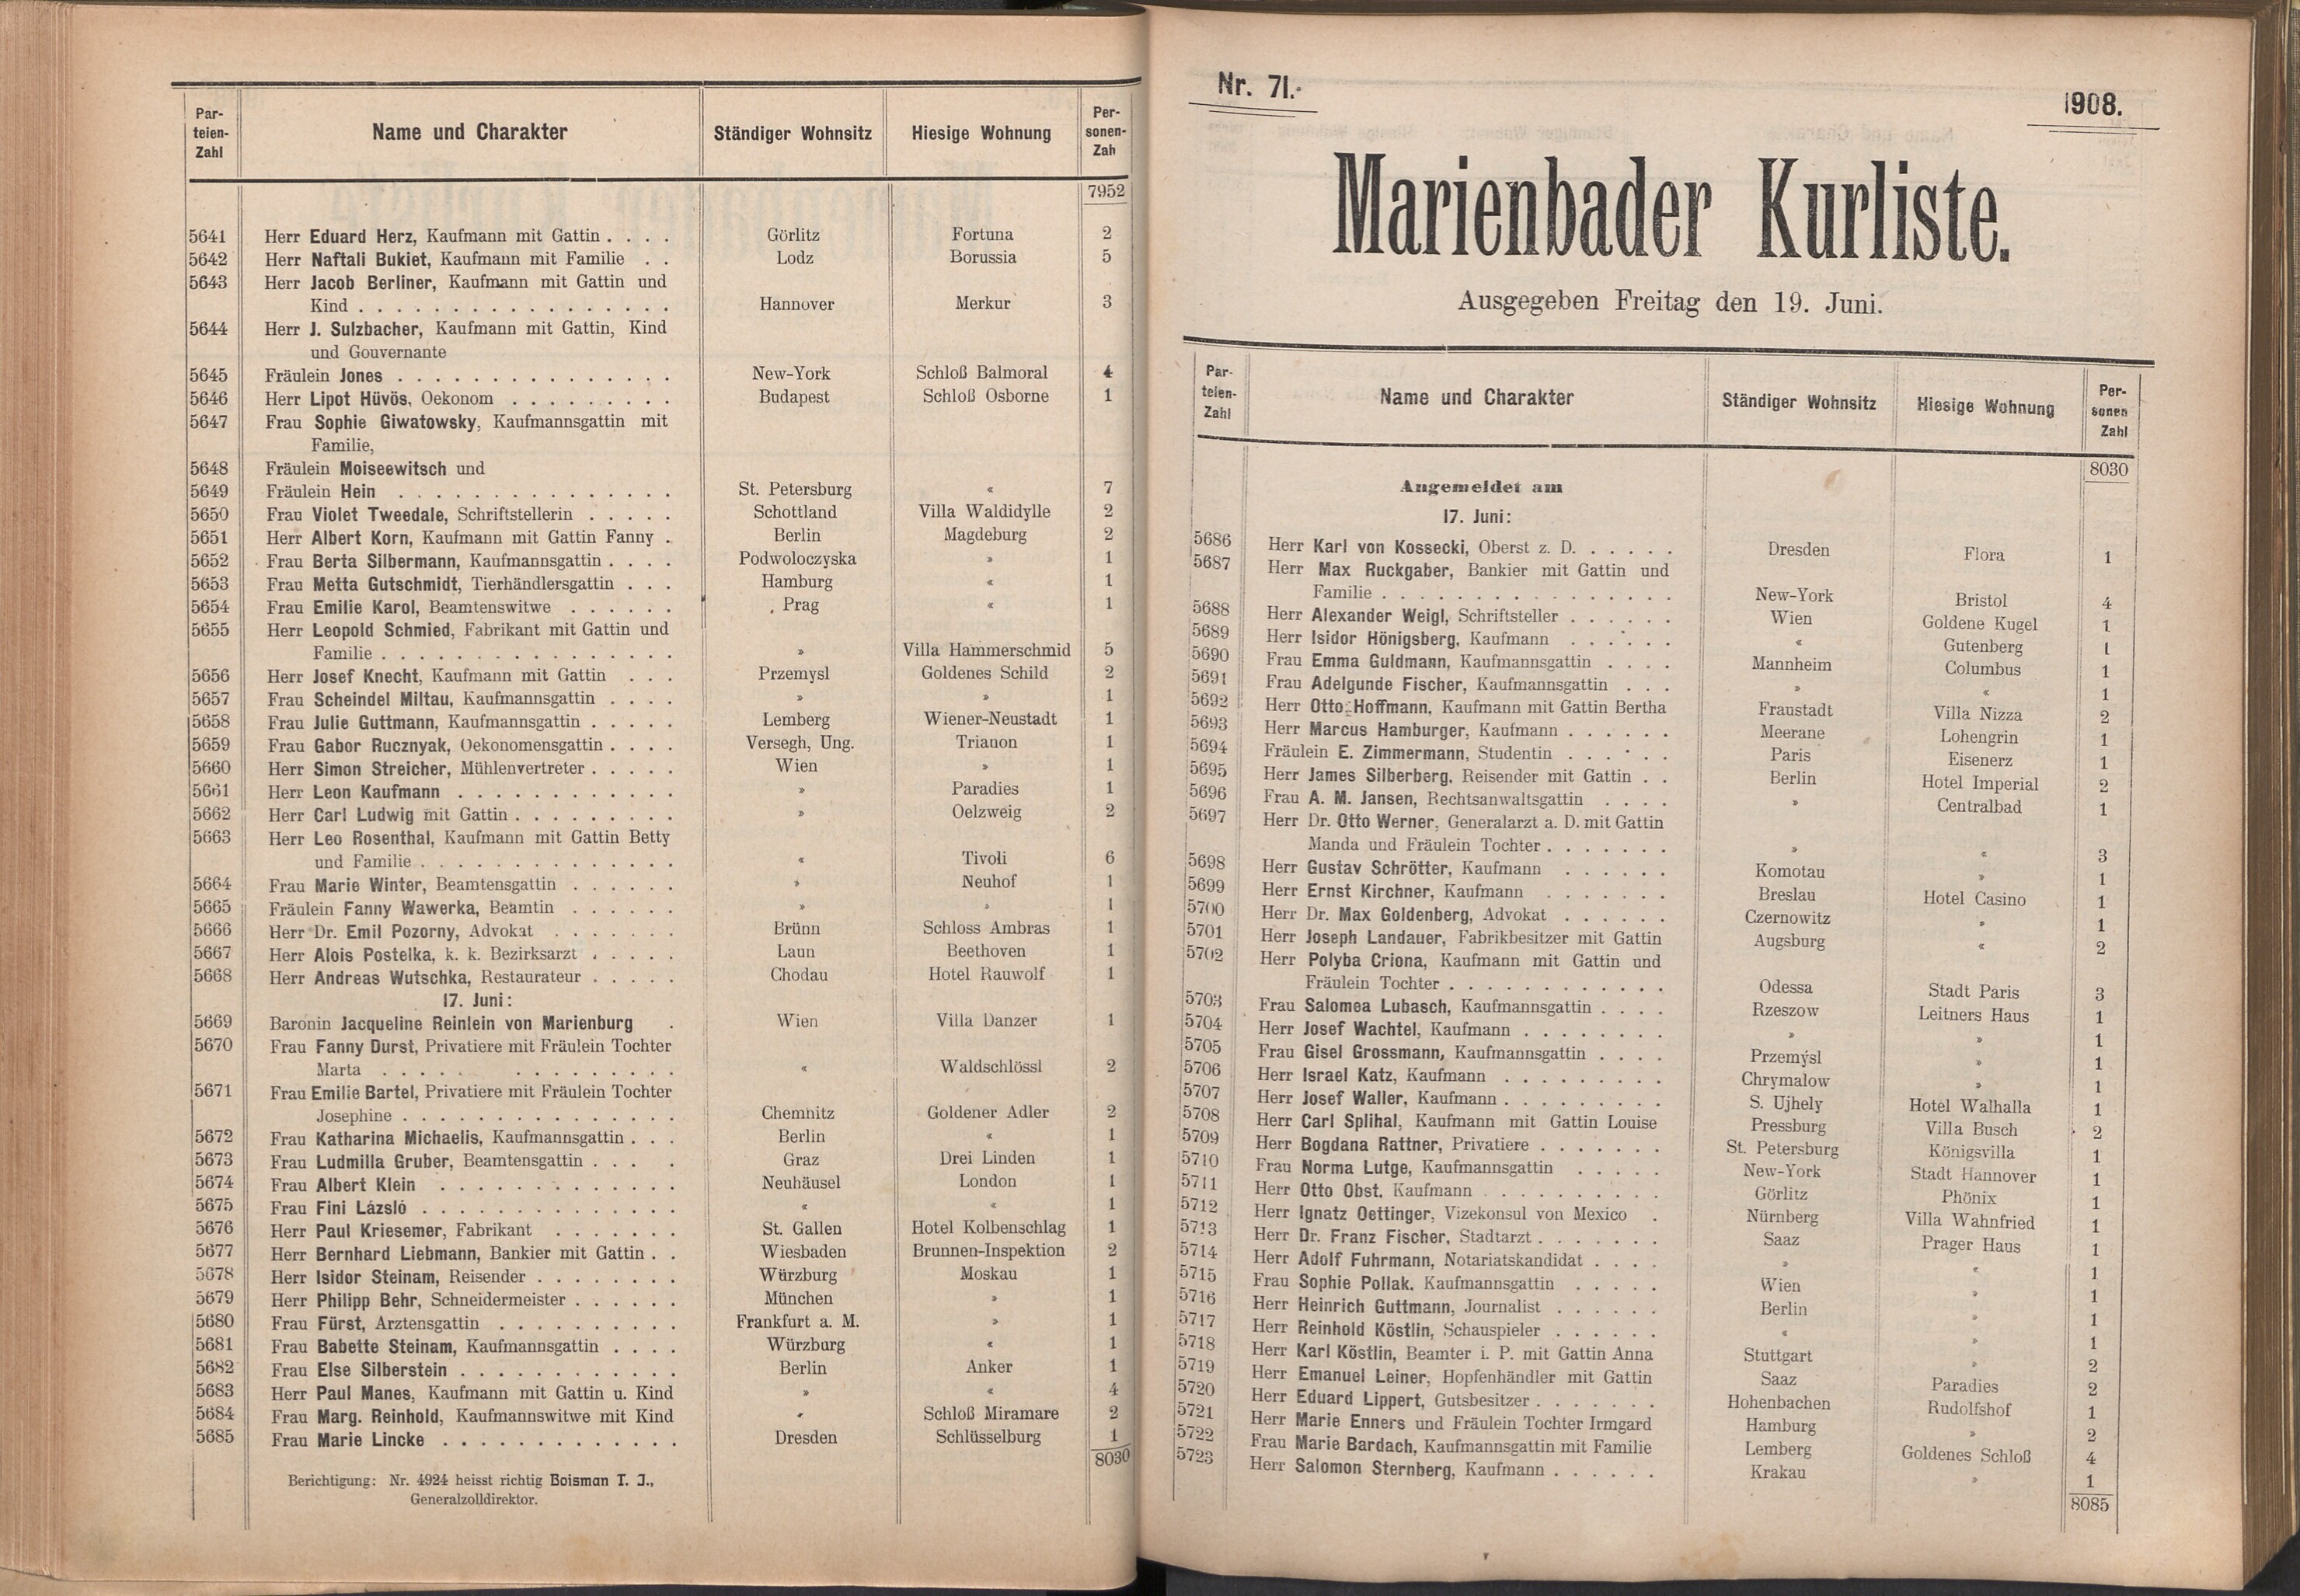 87. soap-ch_knihovna_marienbader-kurliste-1908_0870